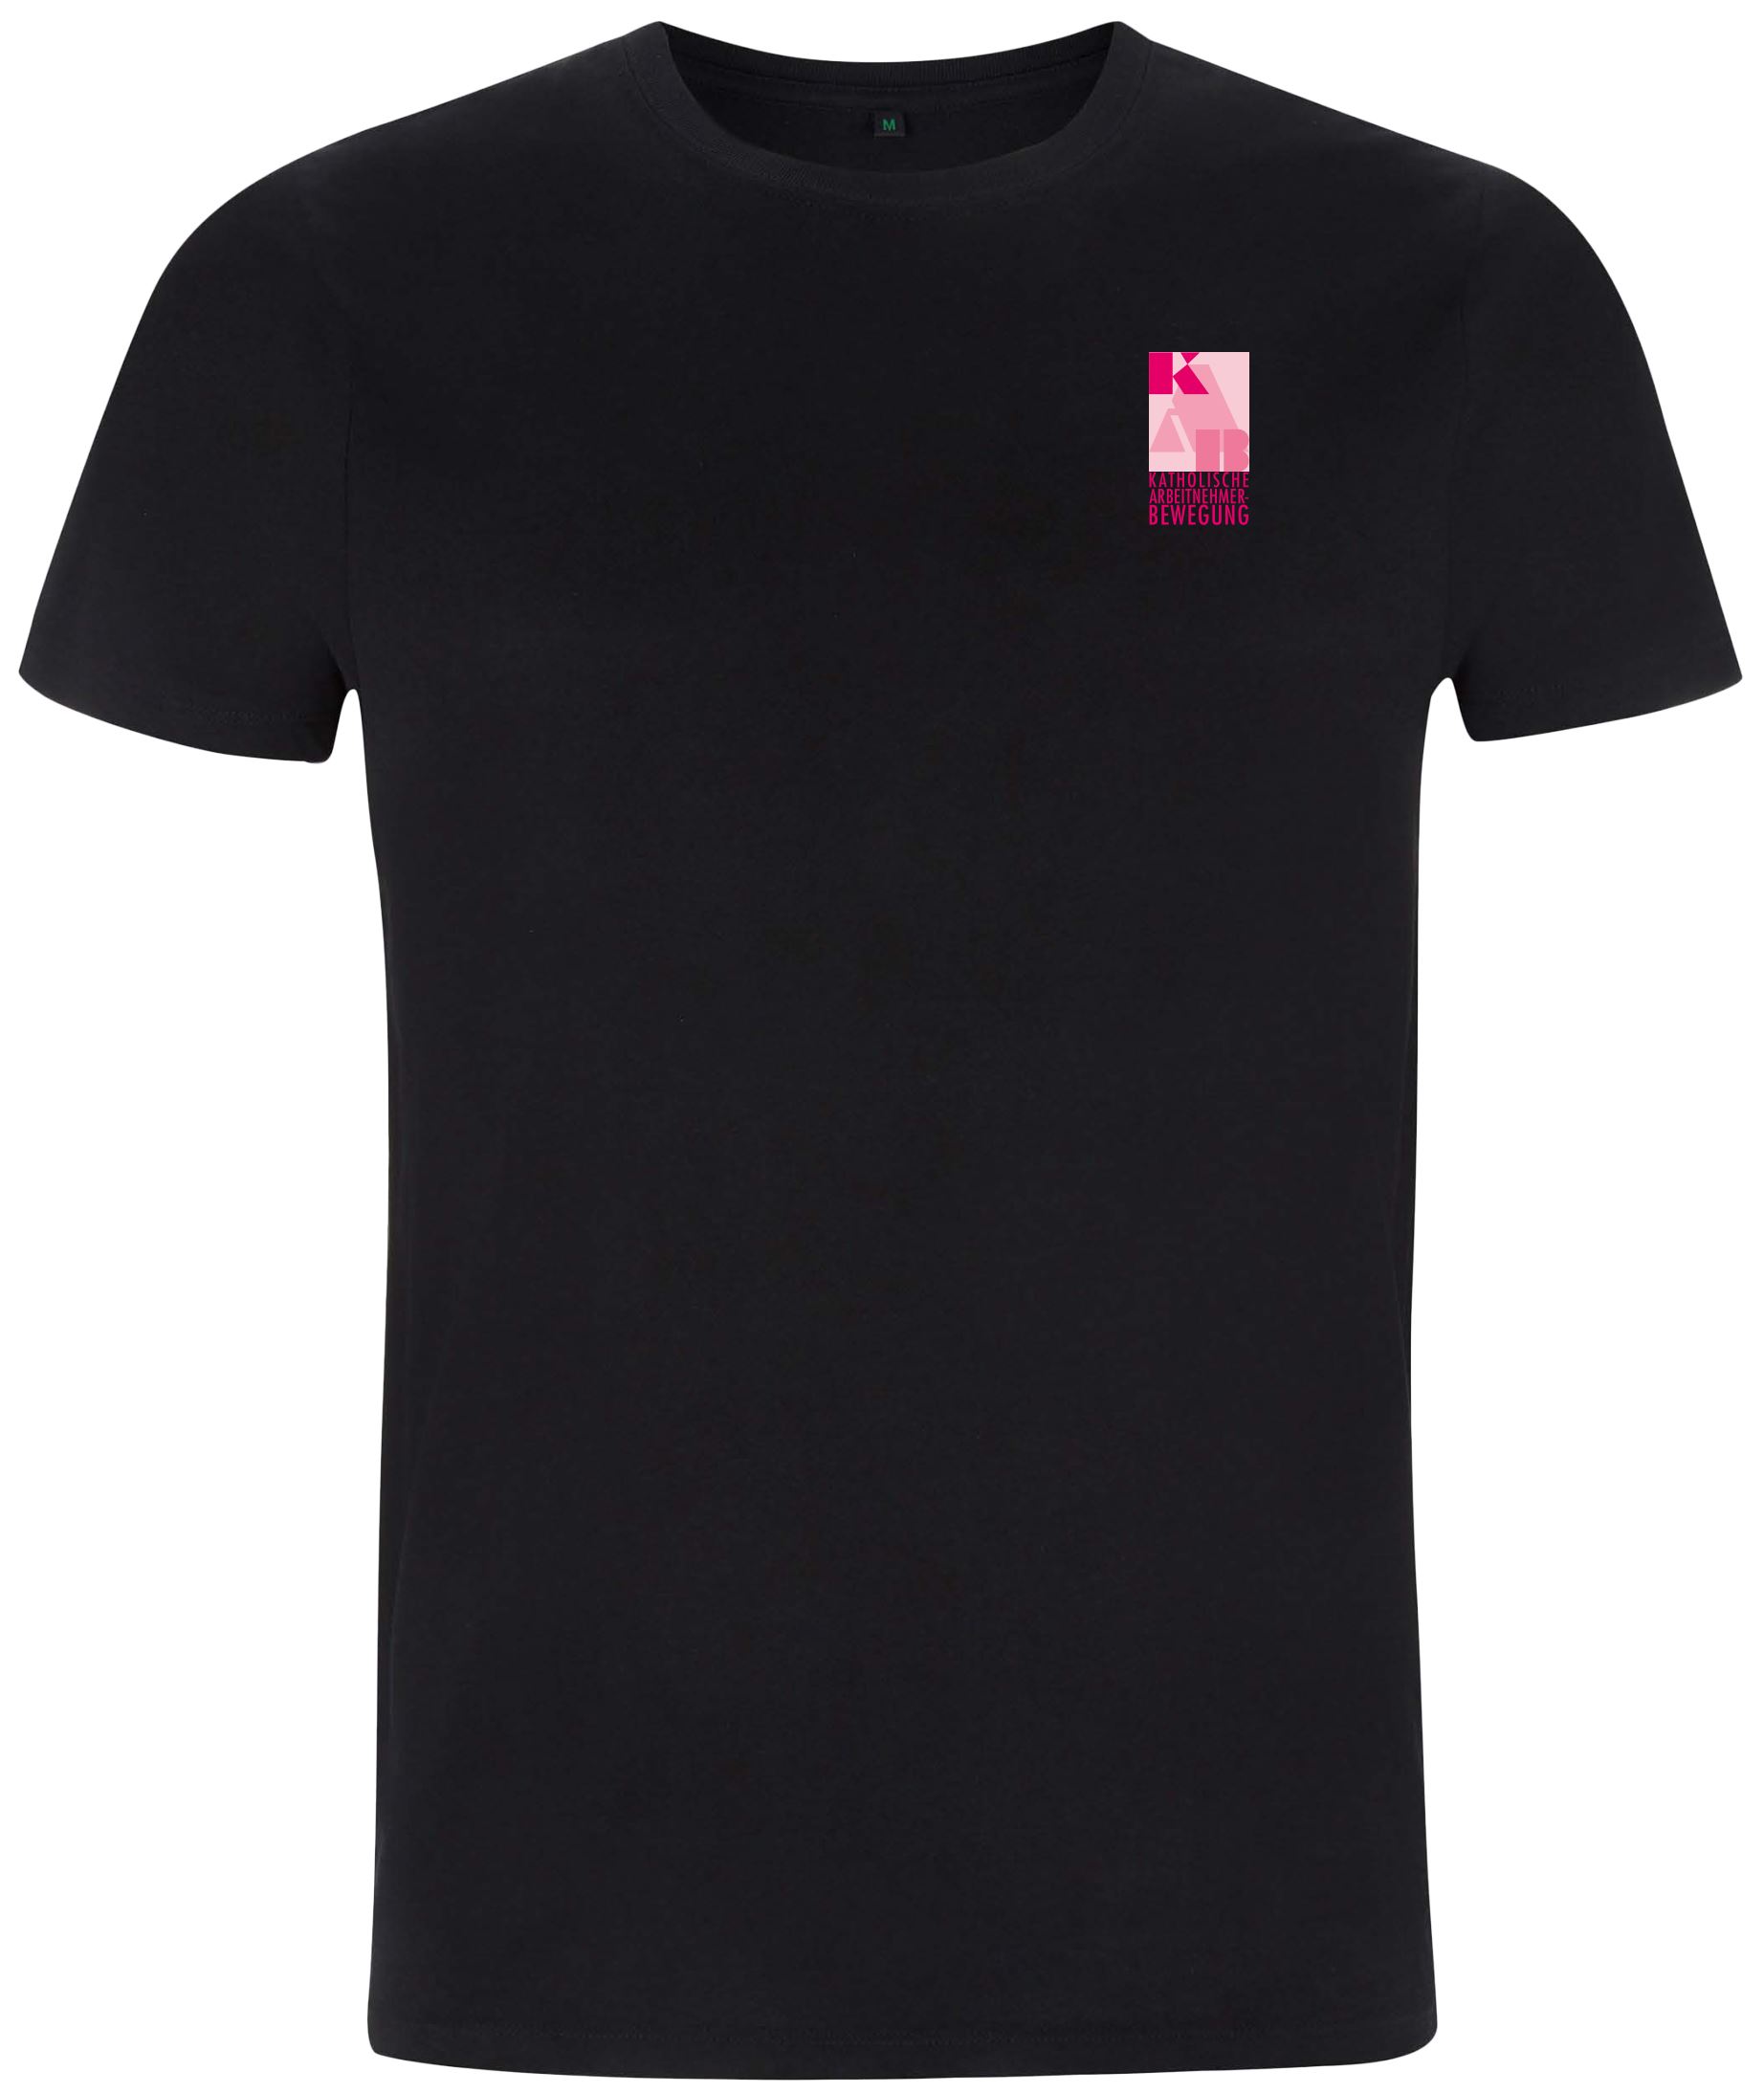 KAB T-Shirt schwarz mit Kampagnenmotiv Gr. M